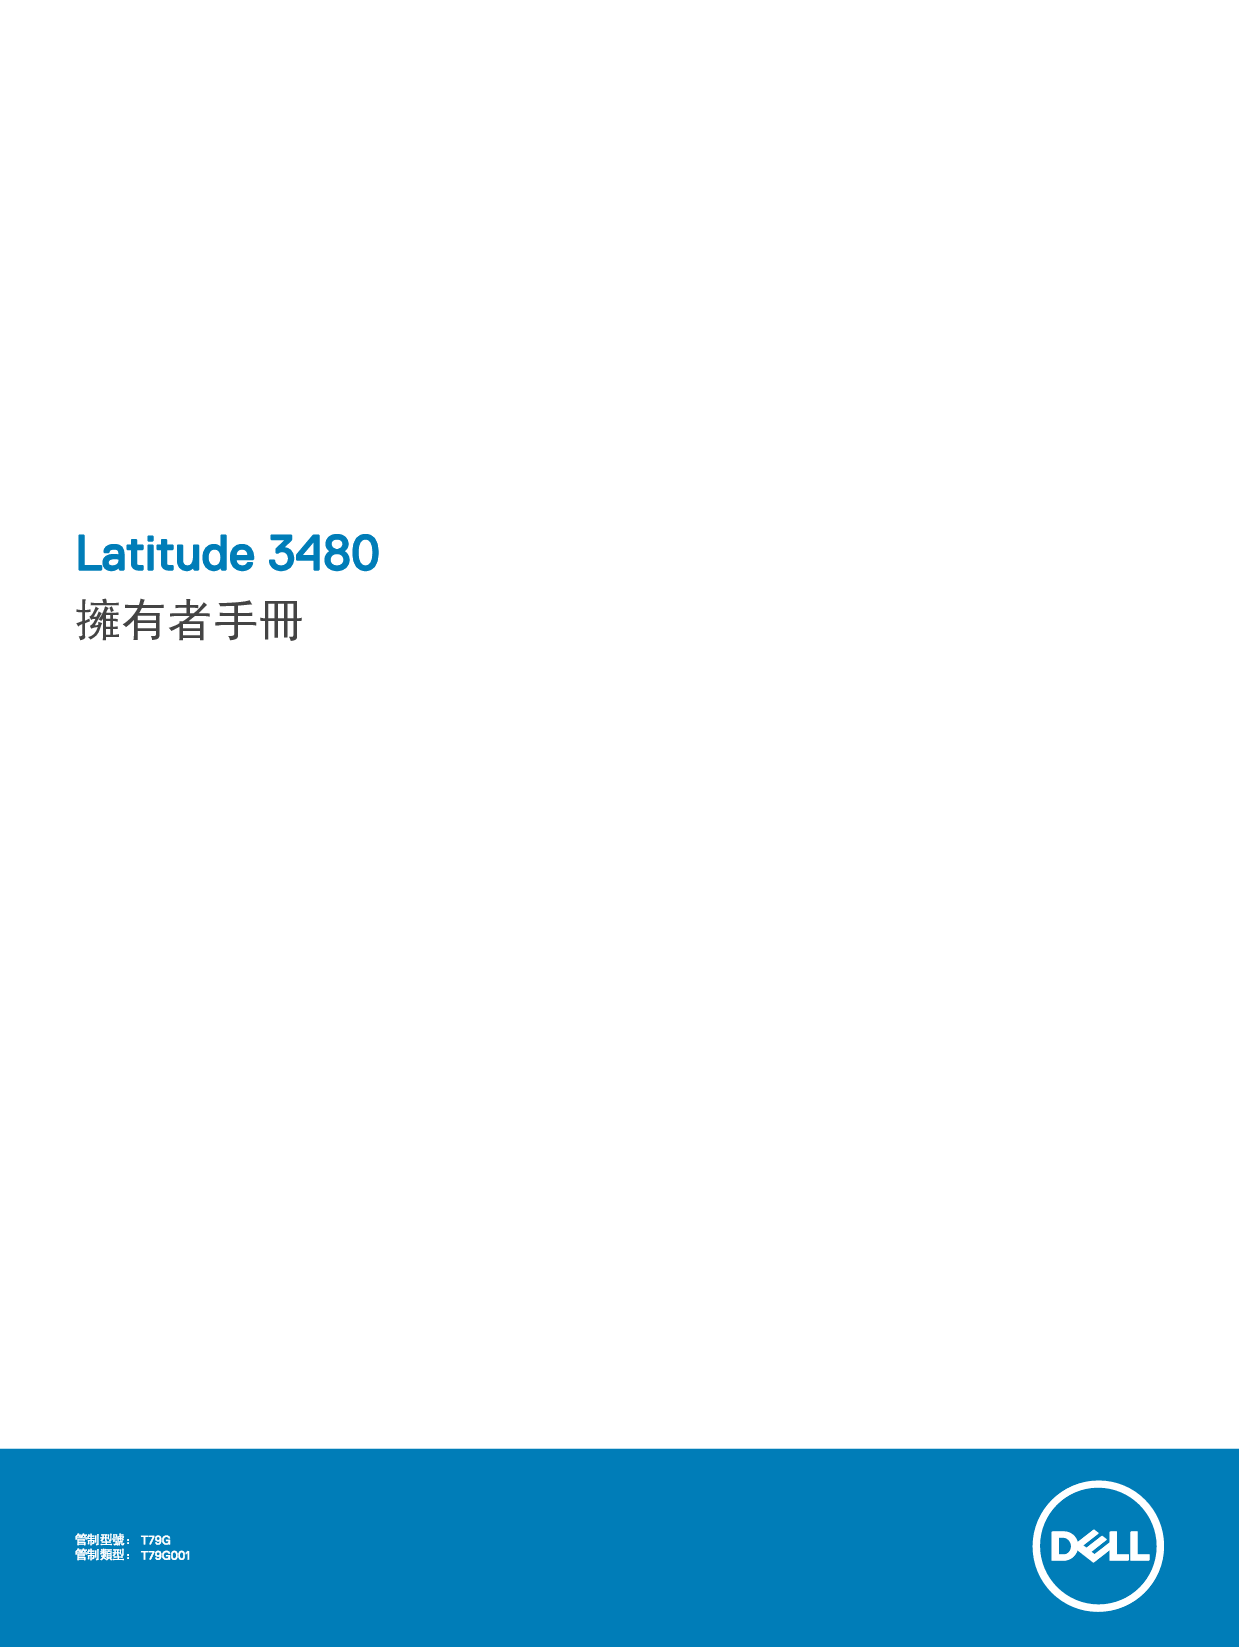 戴尔 Dell Latitude 3480 繁体 用户手册 封面